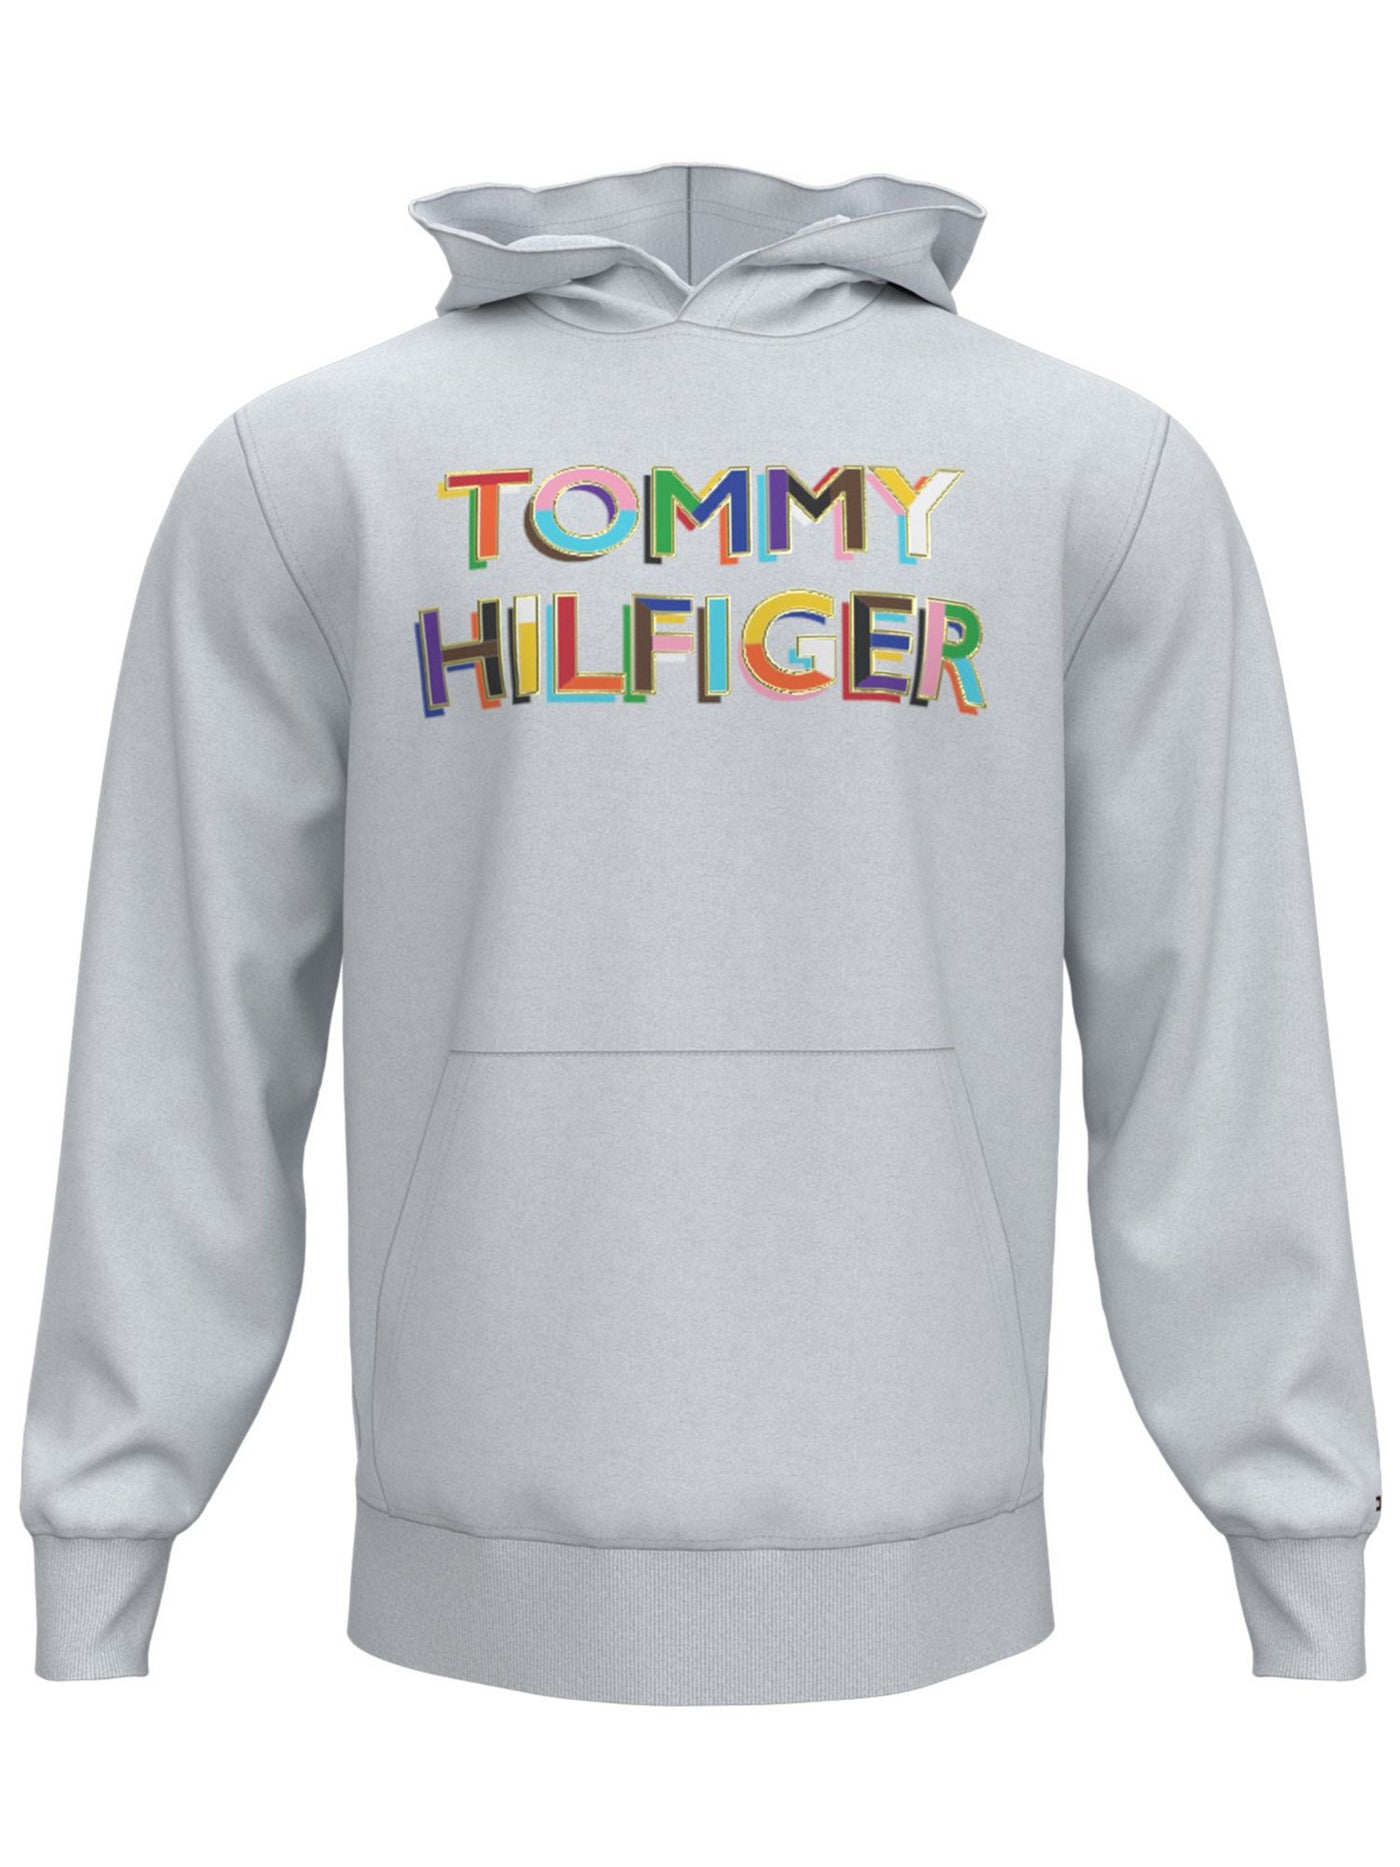 TOMMY HILFIGER Mens Pride White Logo Graphic Oversized Fit Stretch Hoodie XXL